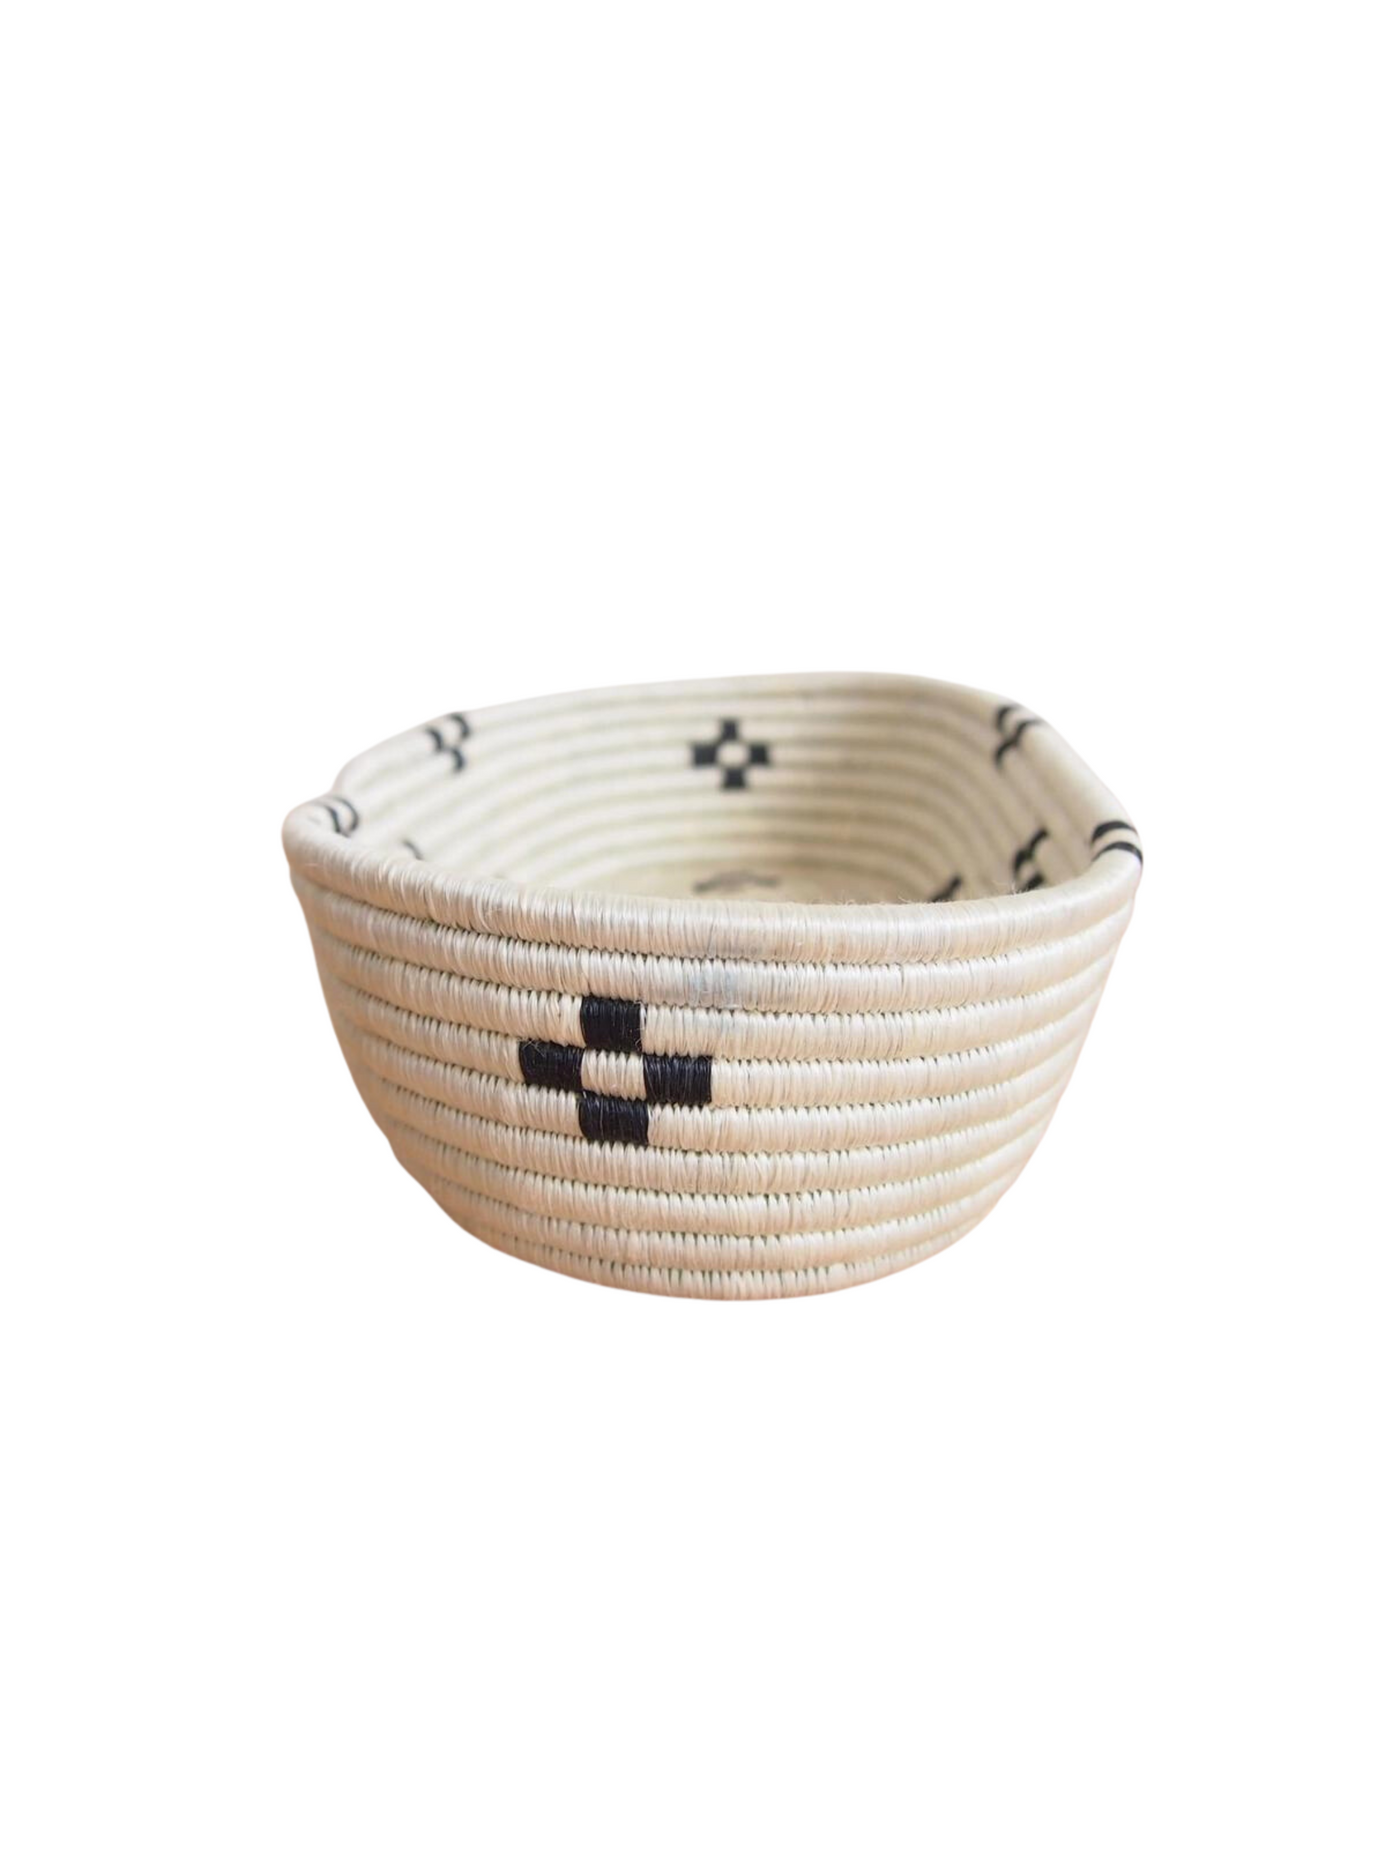 Maraba Bread Basket